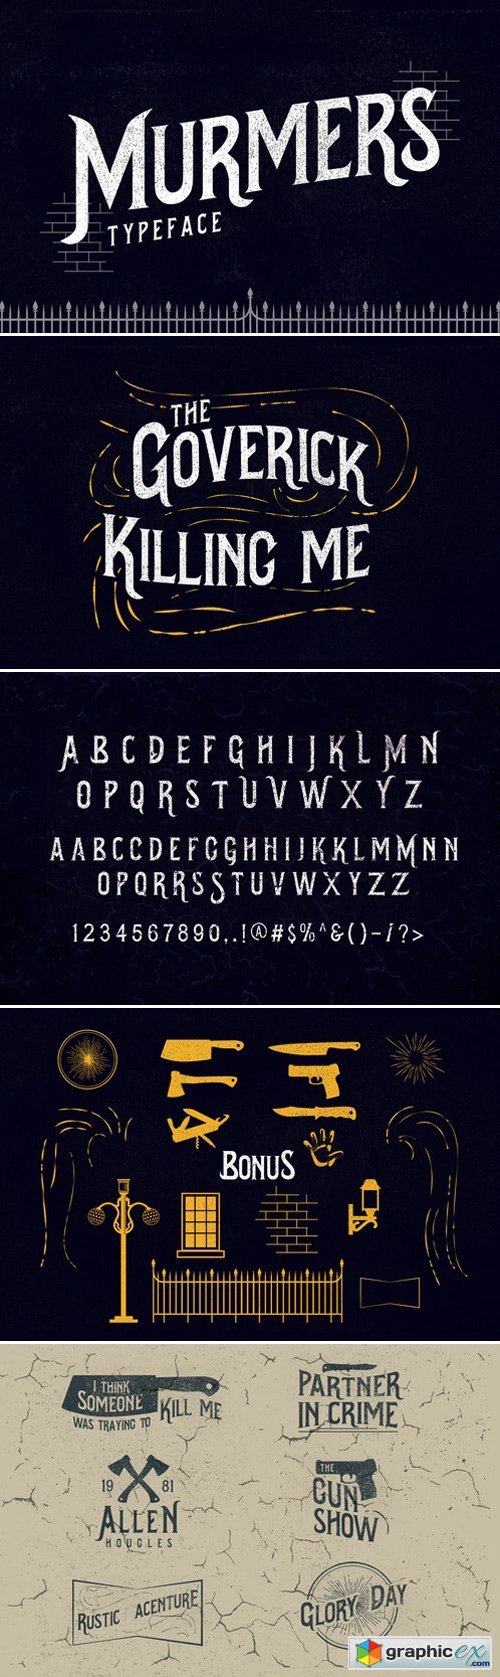 Murmers Typeface